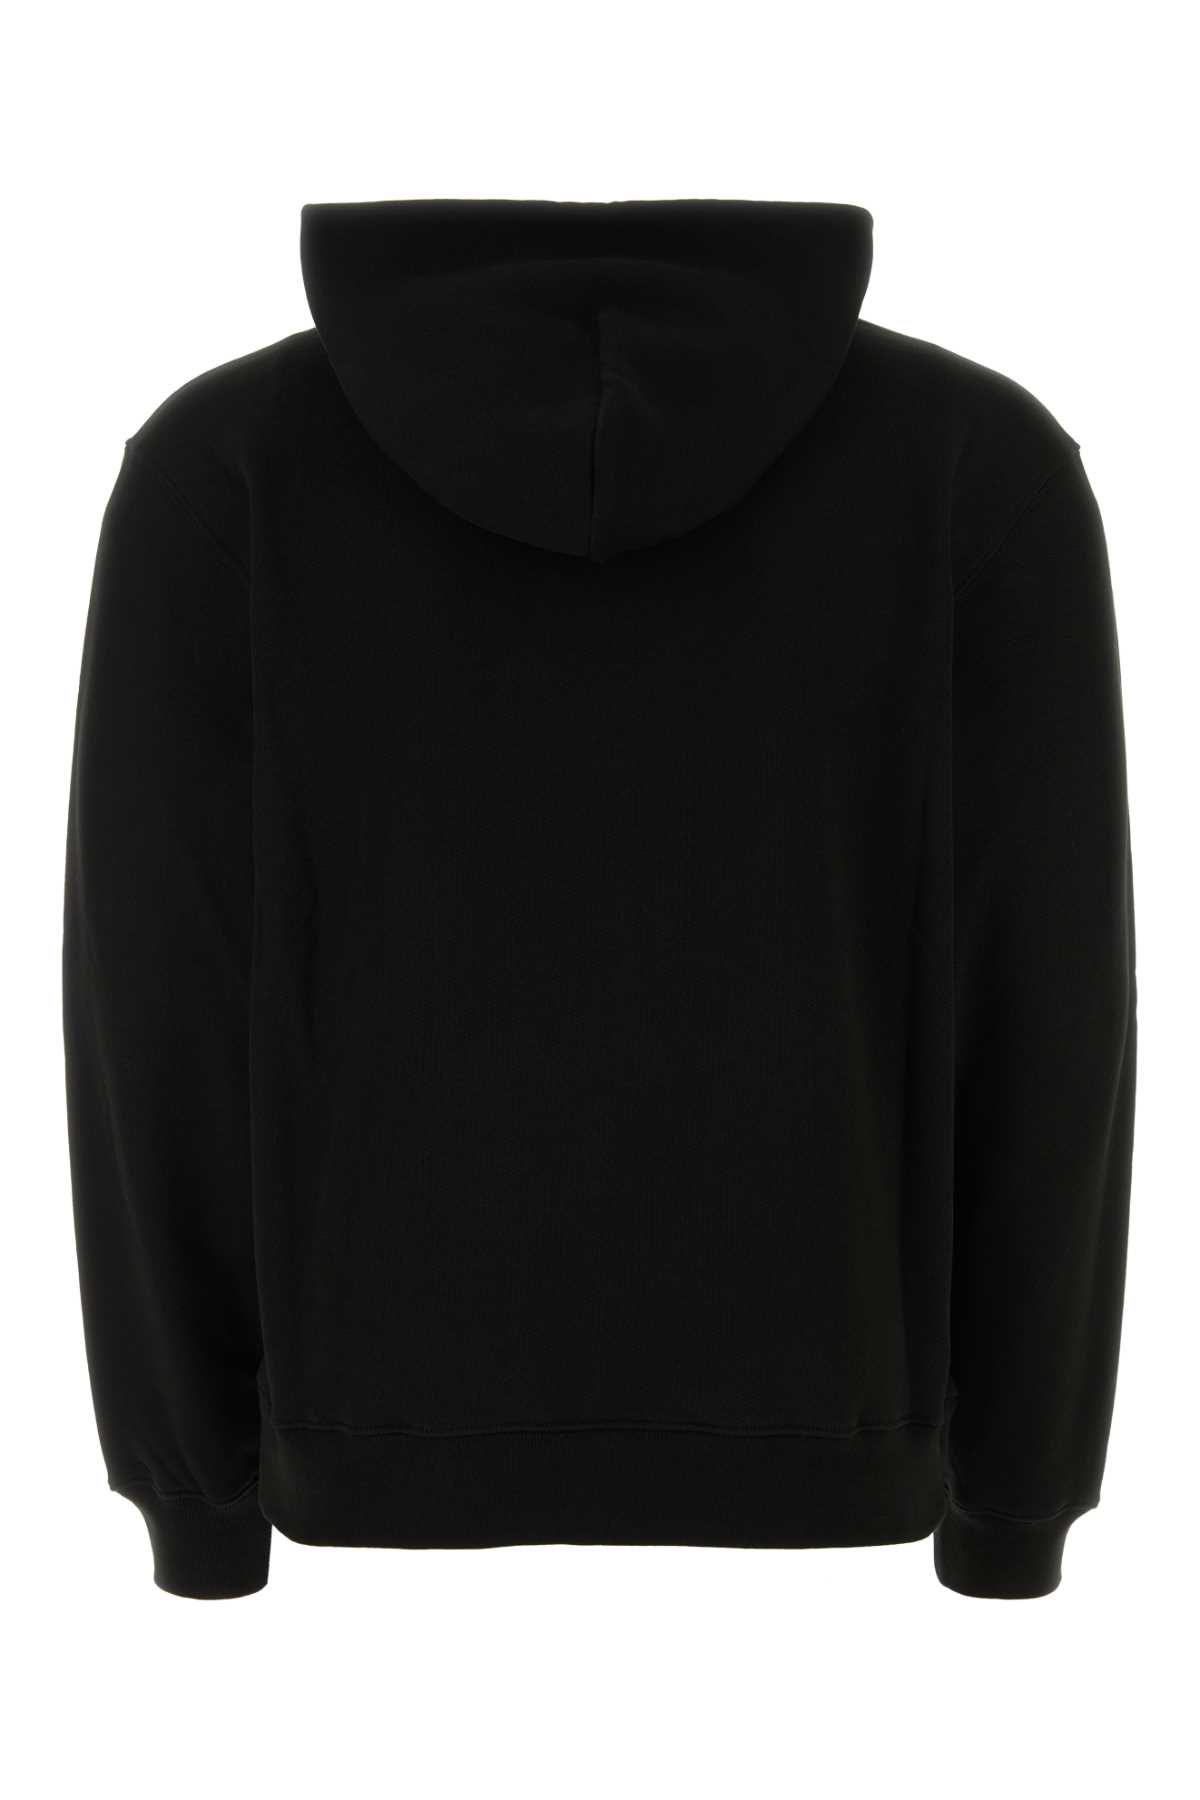 Kenzo Black Cotton Sweatshirt In 99j